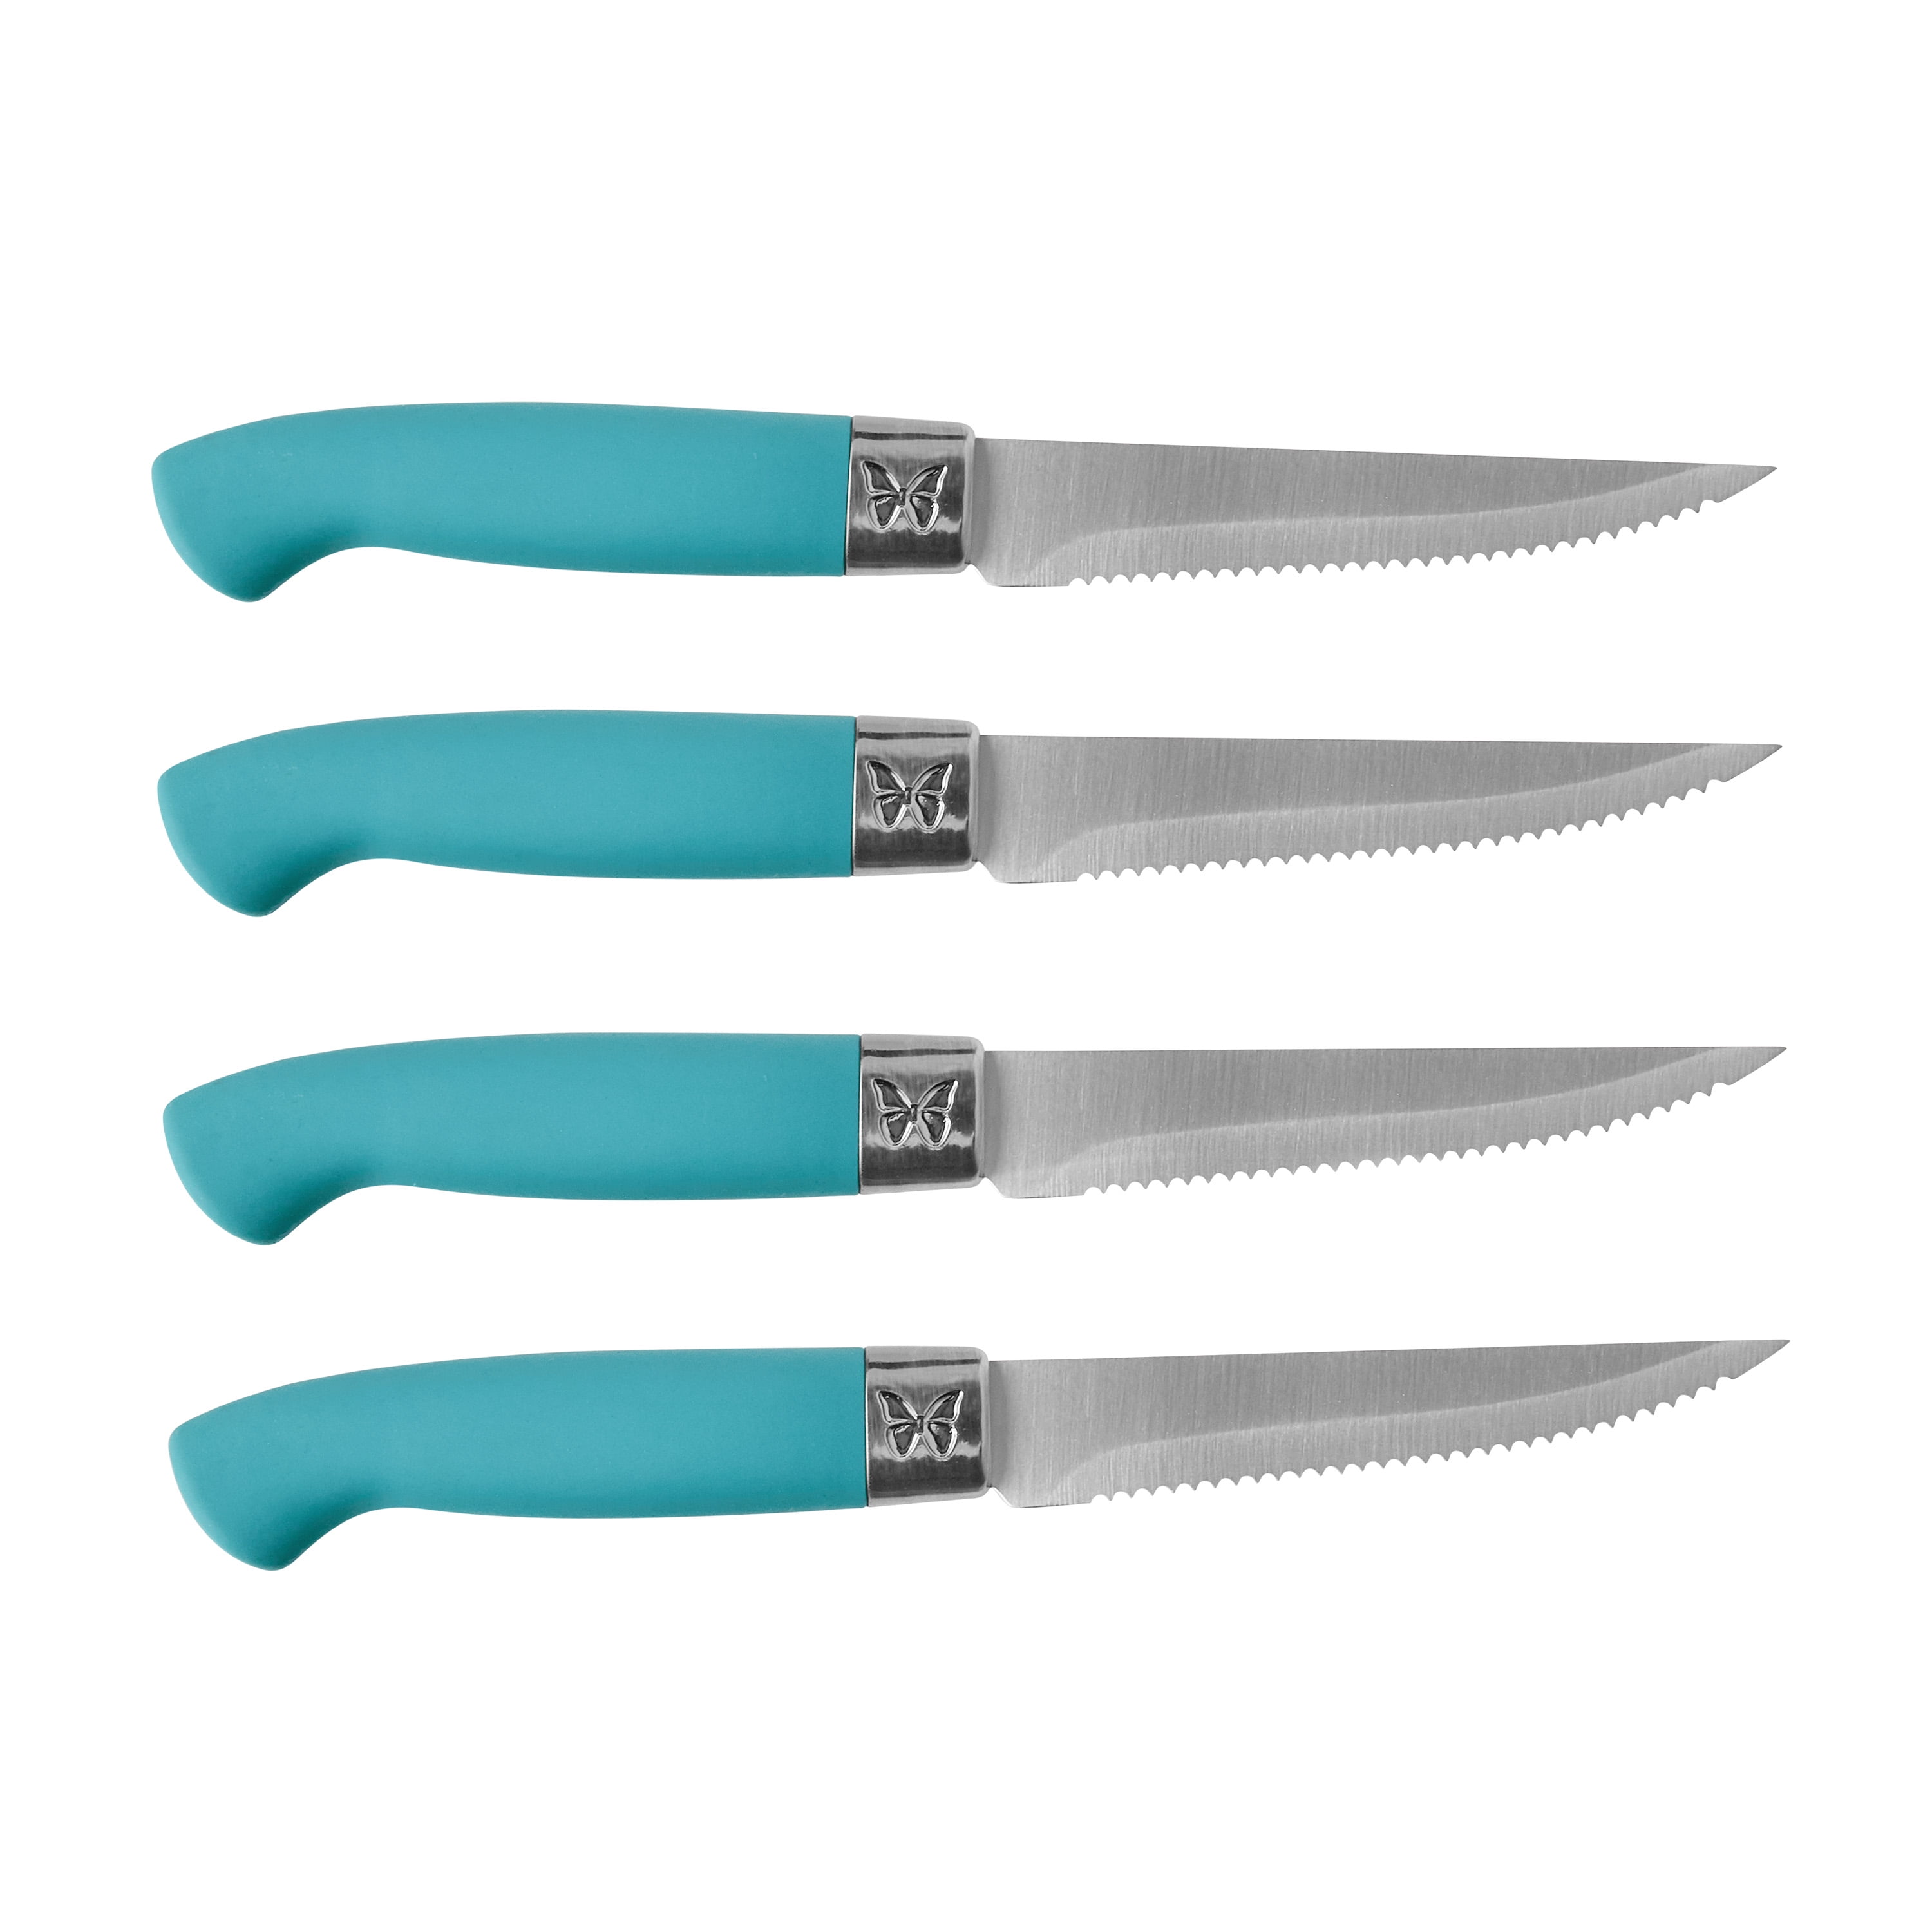 NEW Pioneer Woman Teal BLUE KNIFE SET Cutlery W/ Acacia WOOD BLOCK 14 Pc